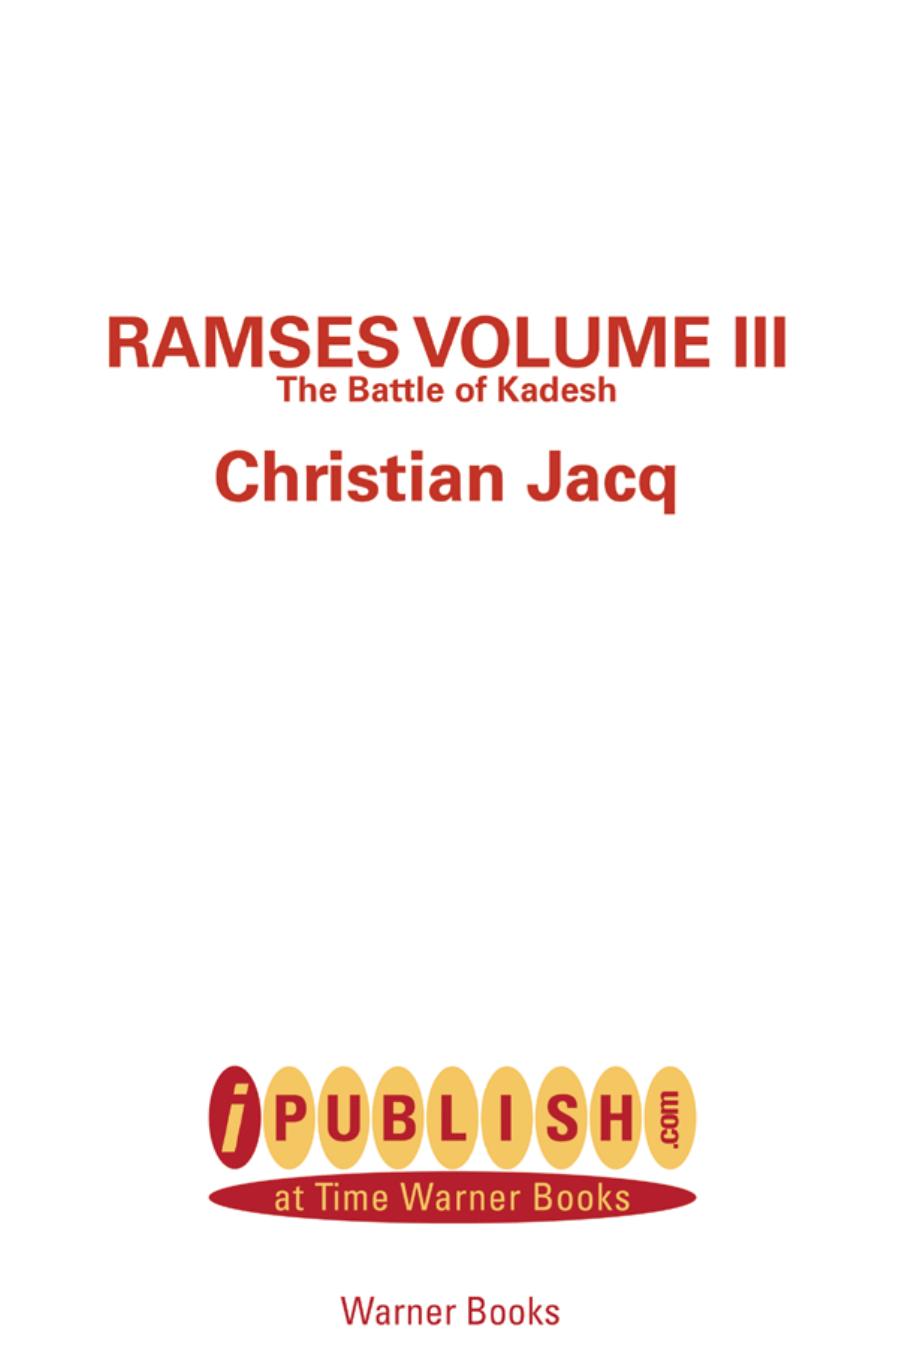 Ramses, Volume III by Christian Jacq